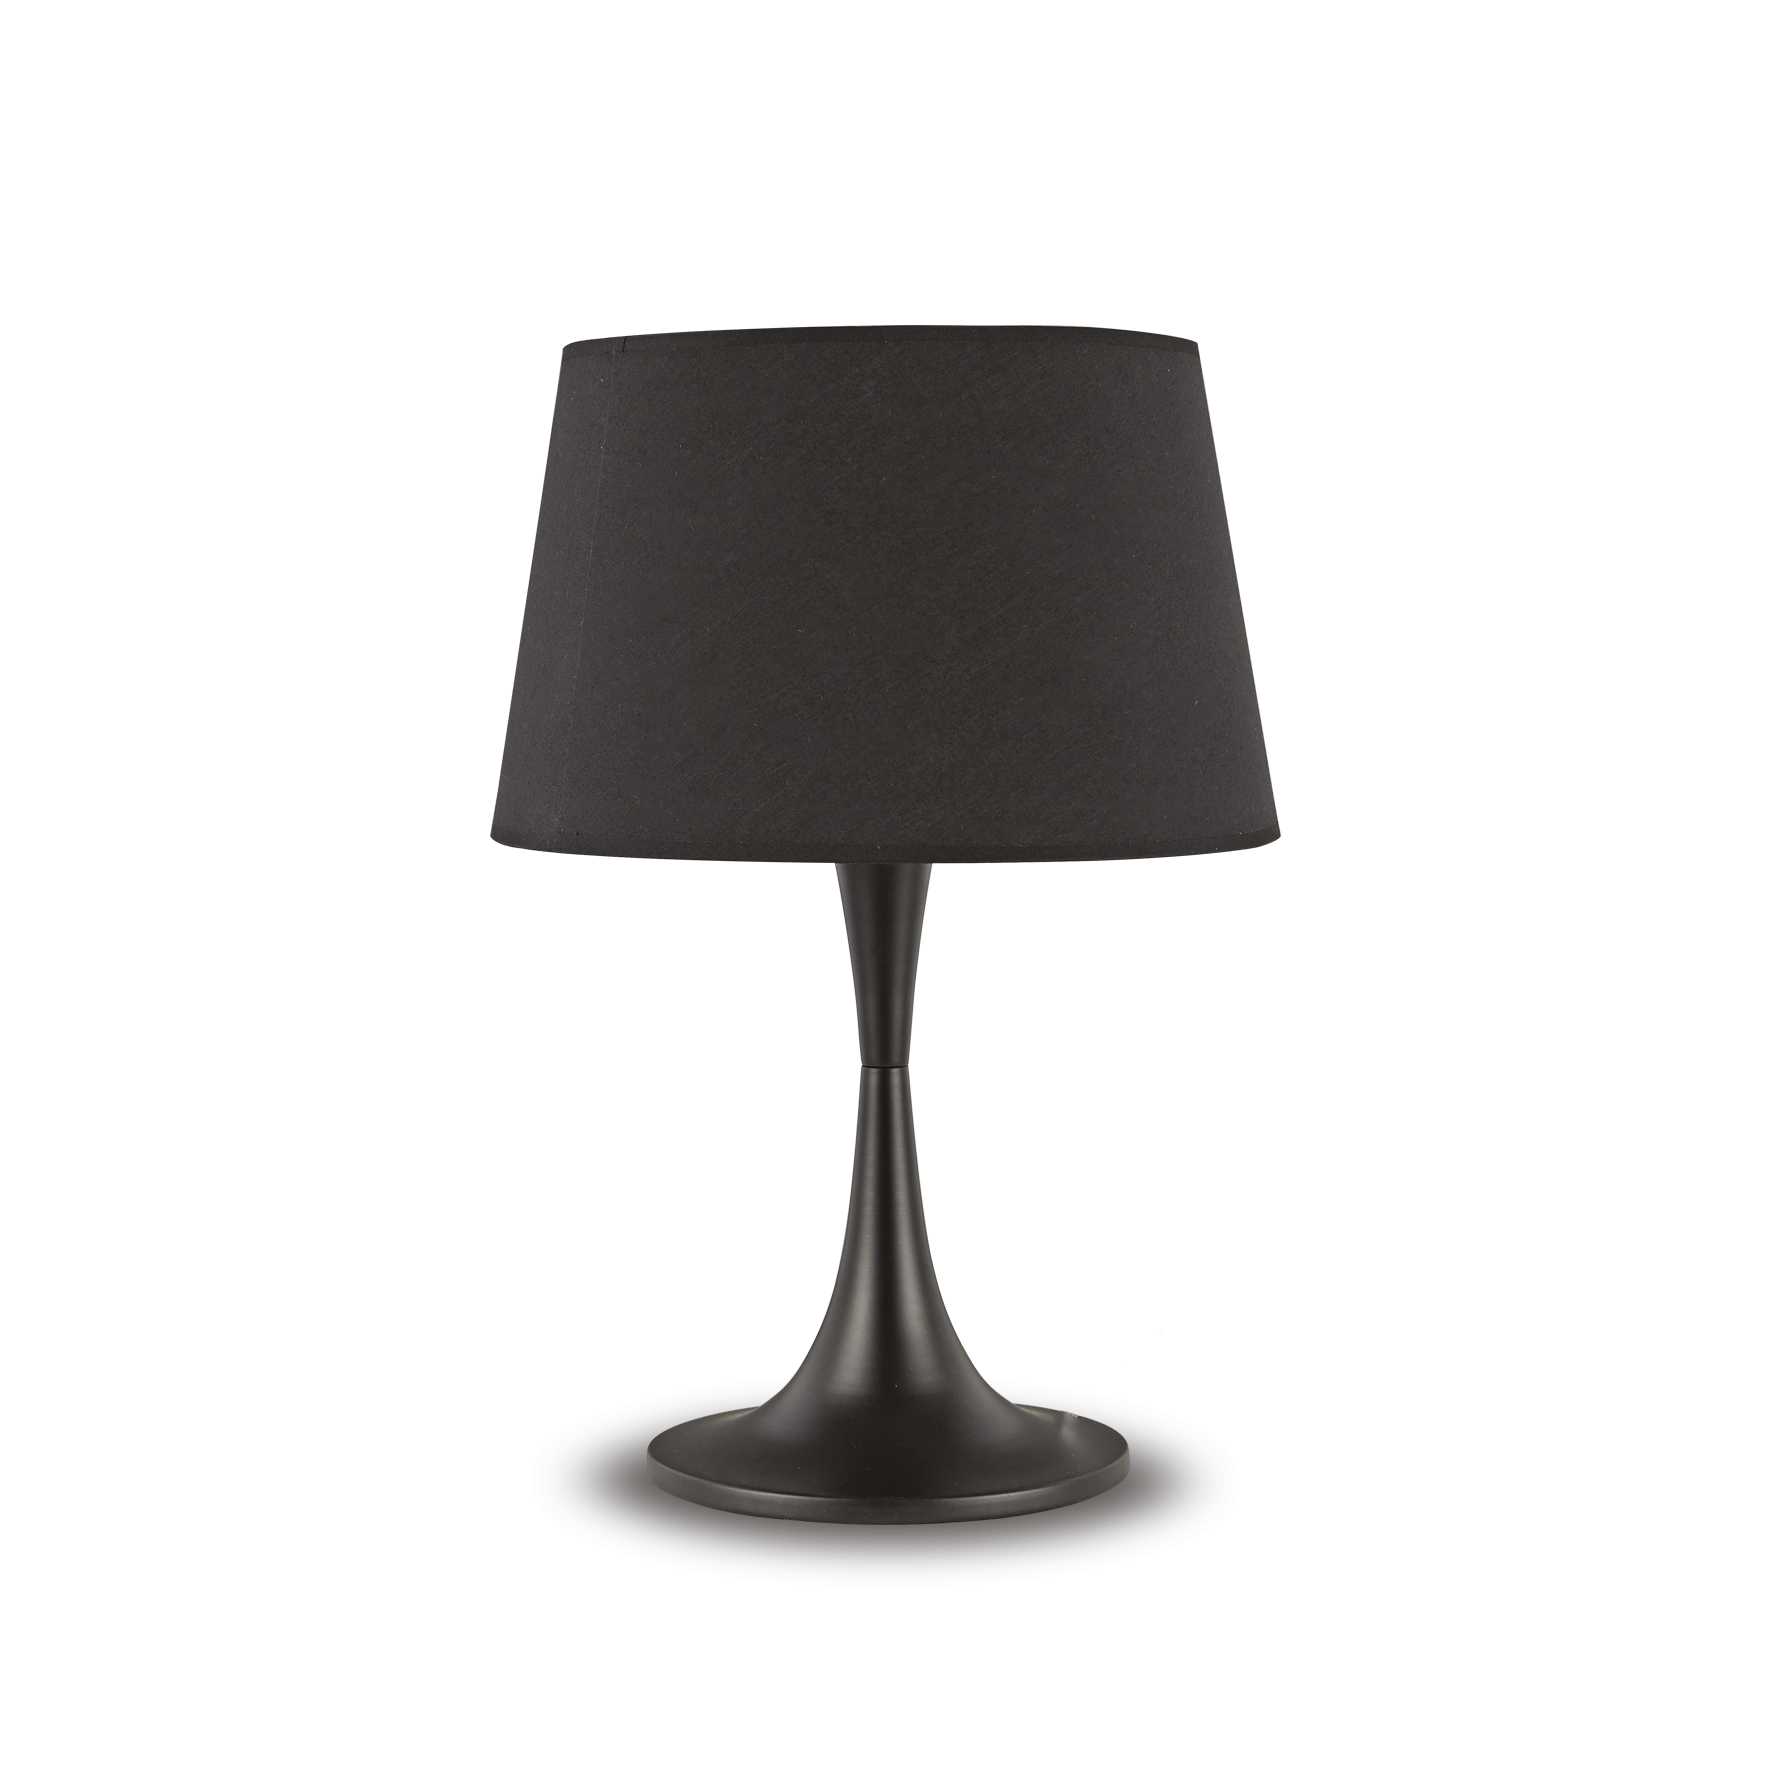 AD hotelska oprema Stolna lampa London tl1 big- Crne boje slika proizvoda